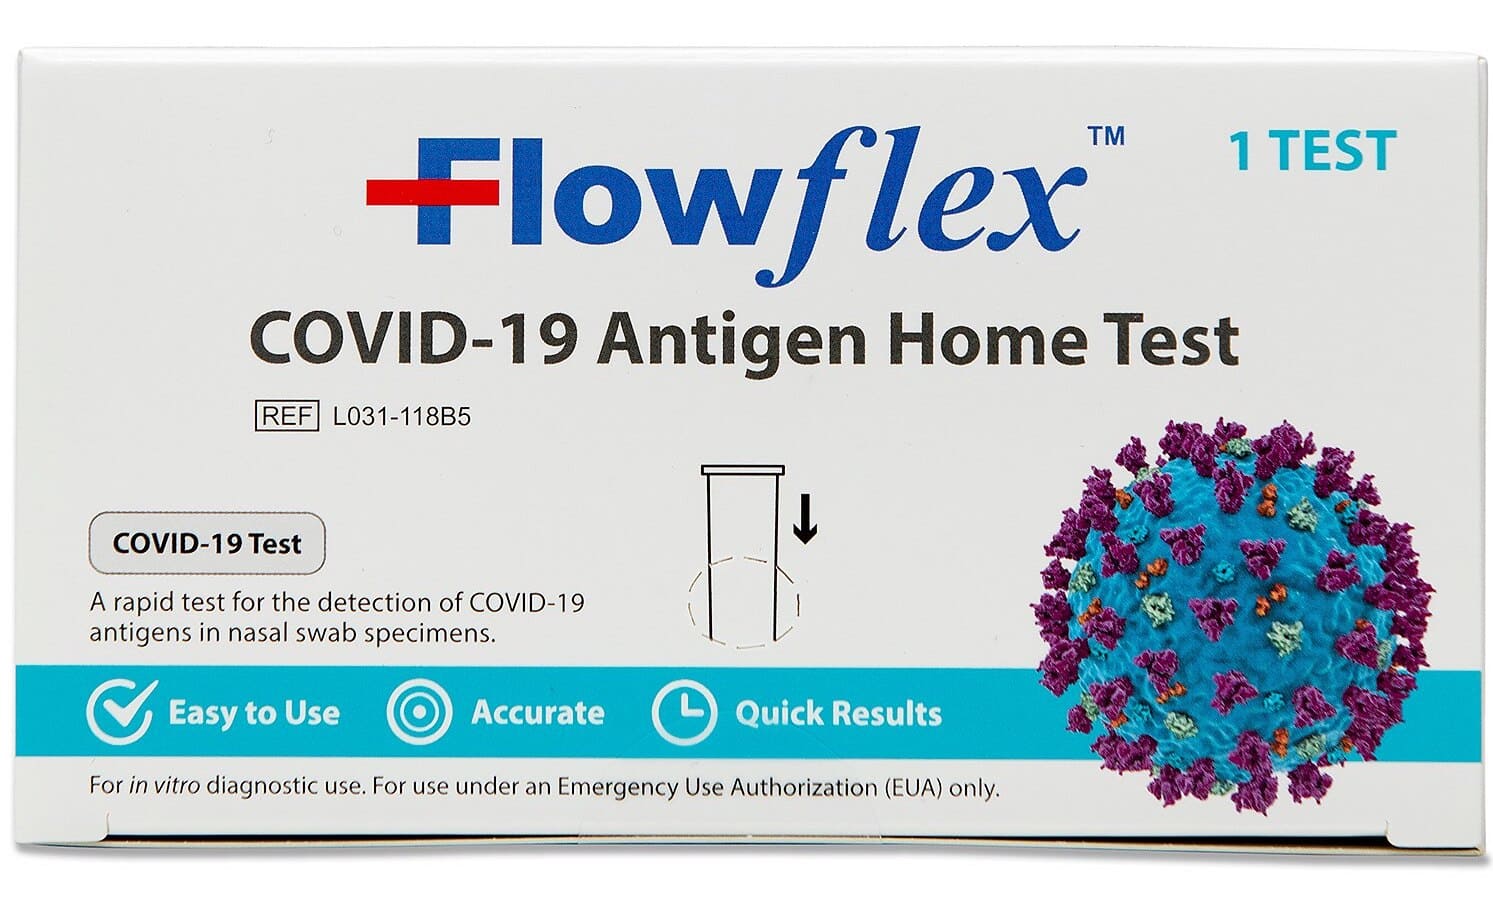 Flowflex COVID-19 Antigen Home Test